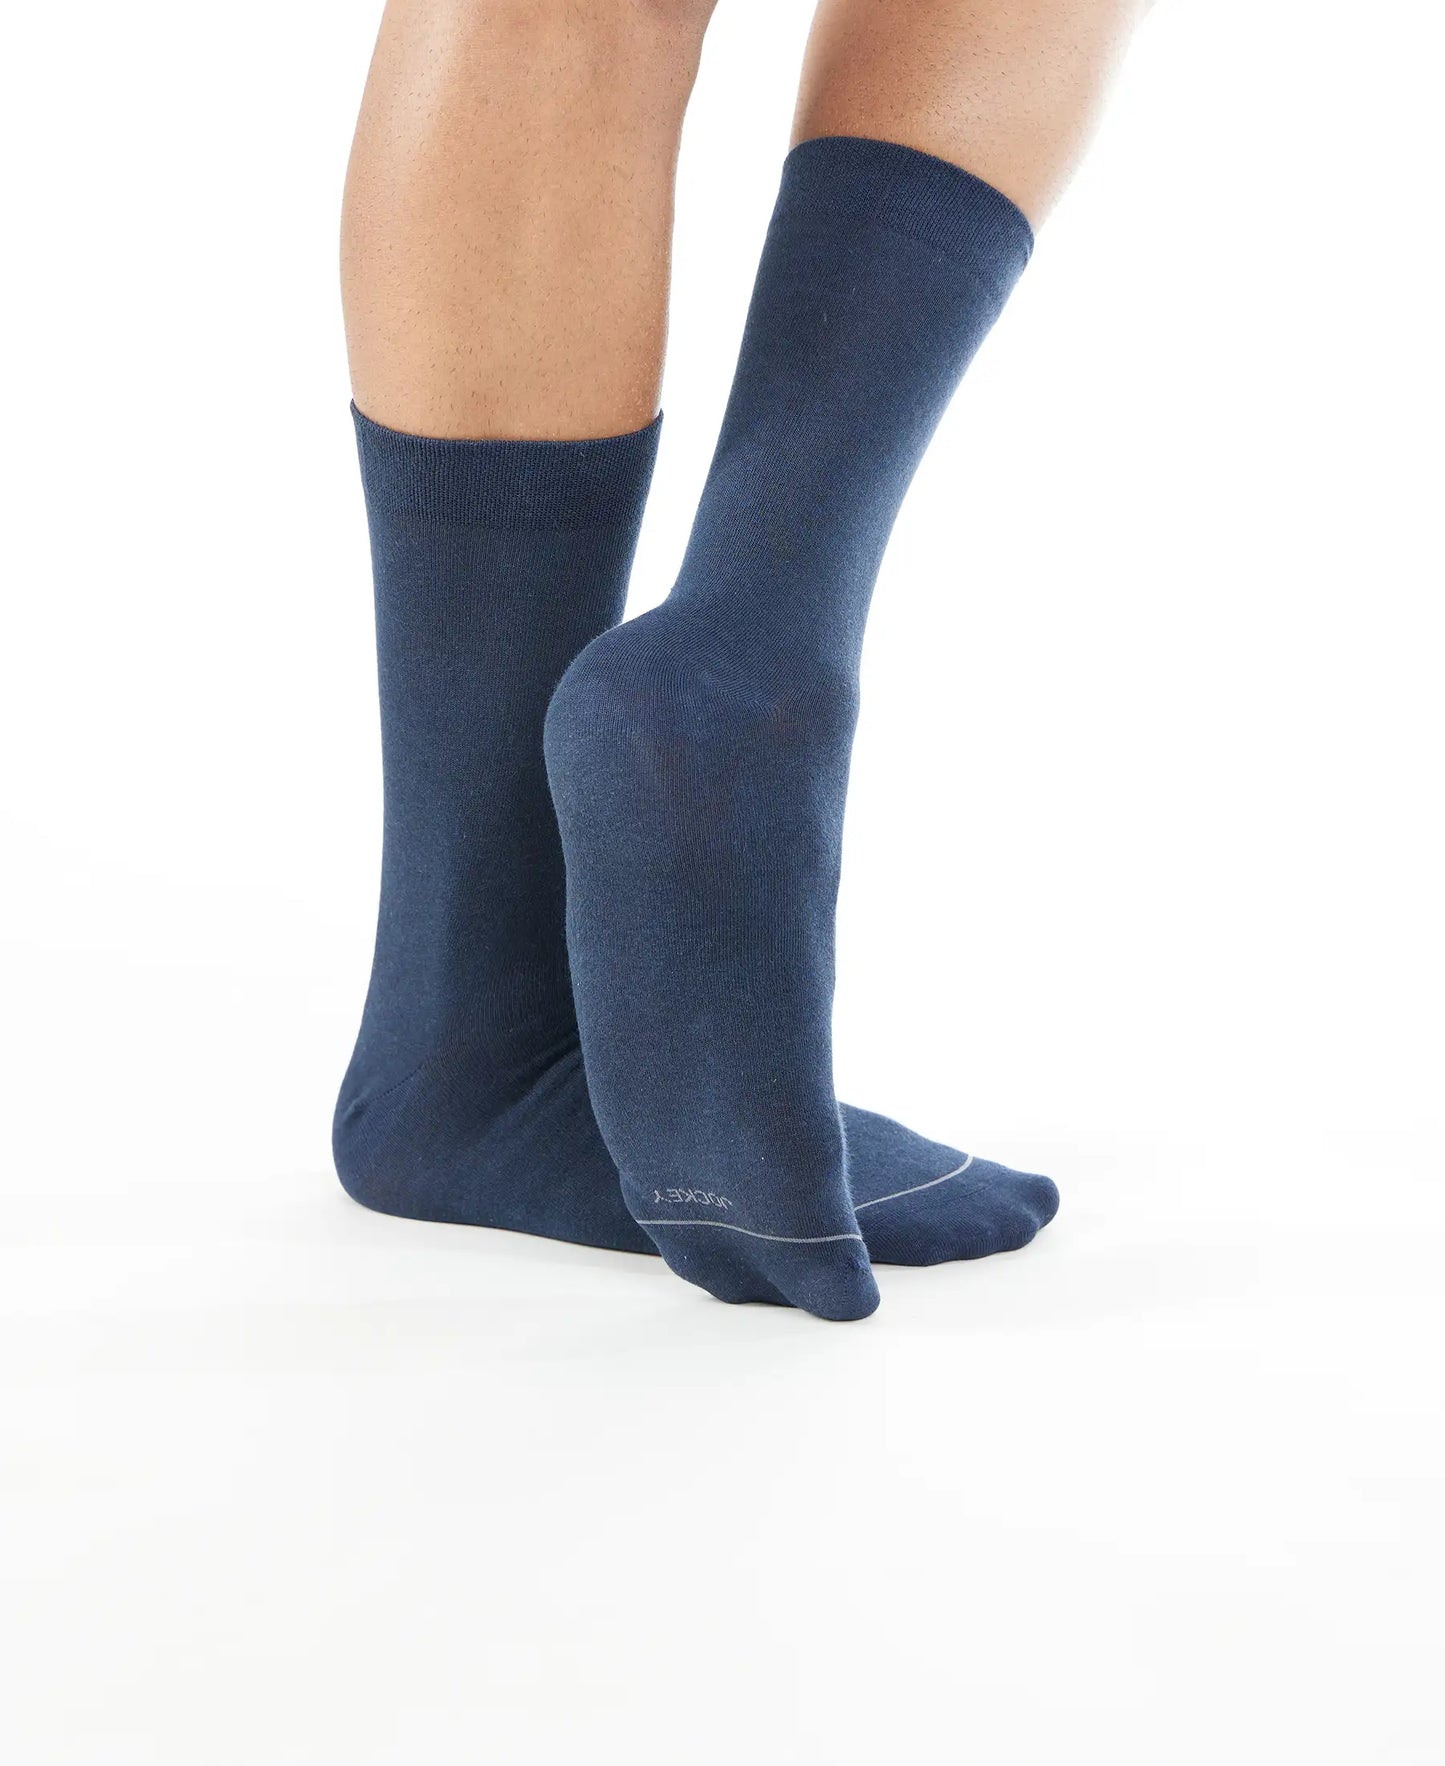 Modal Cotton Elastane Stretch Crew Length Socks with StayFresh Treatment - Navy